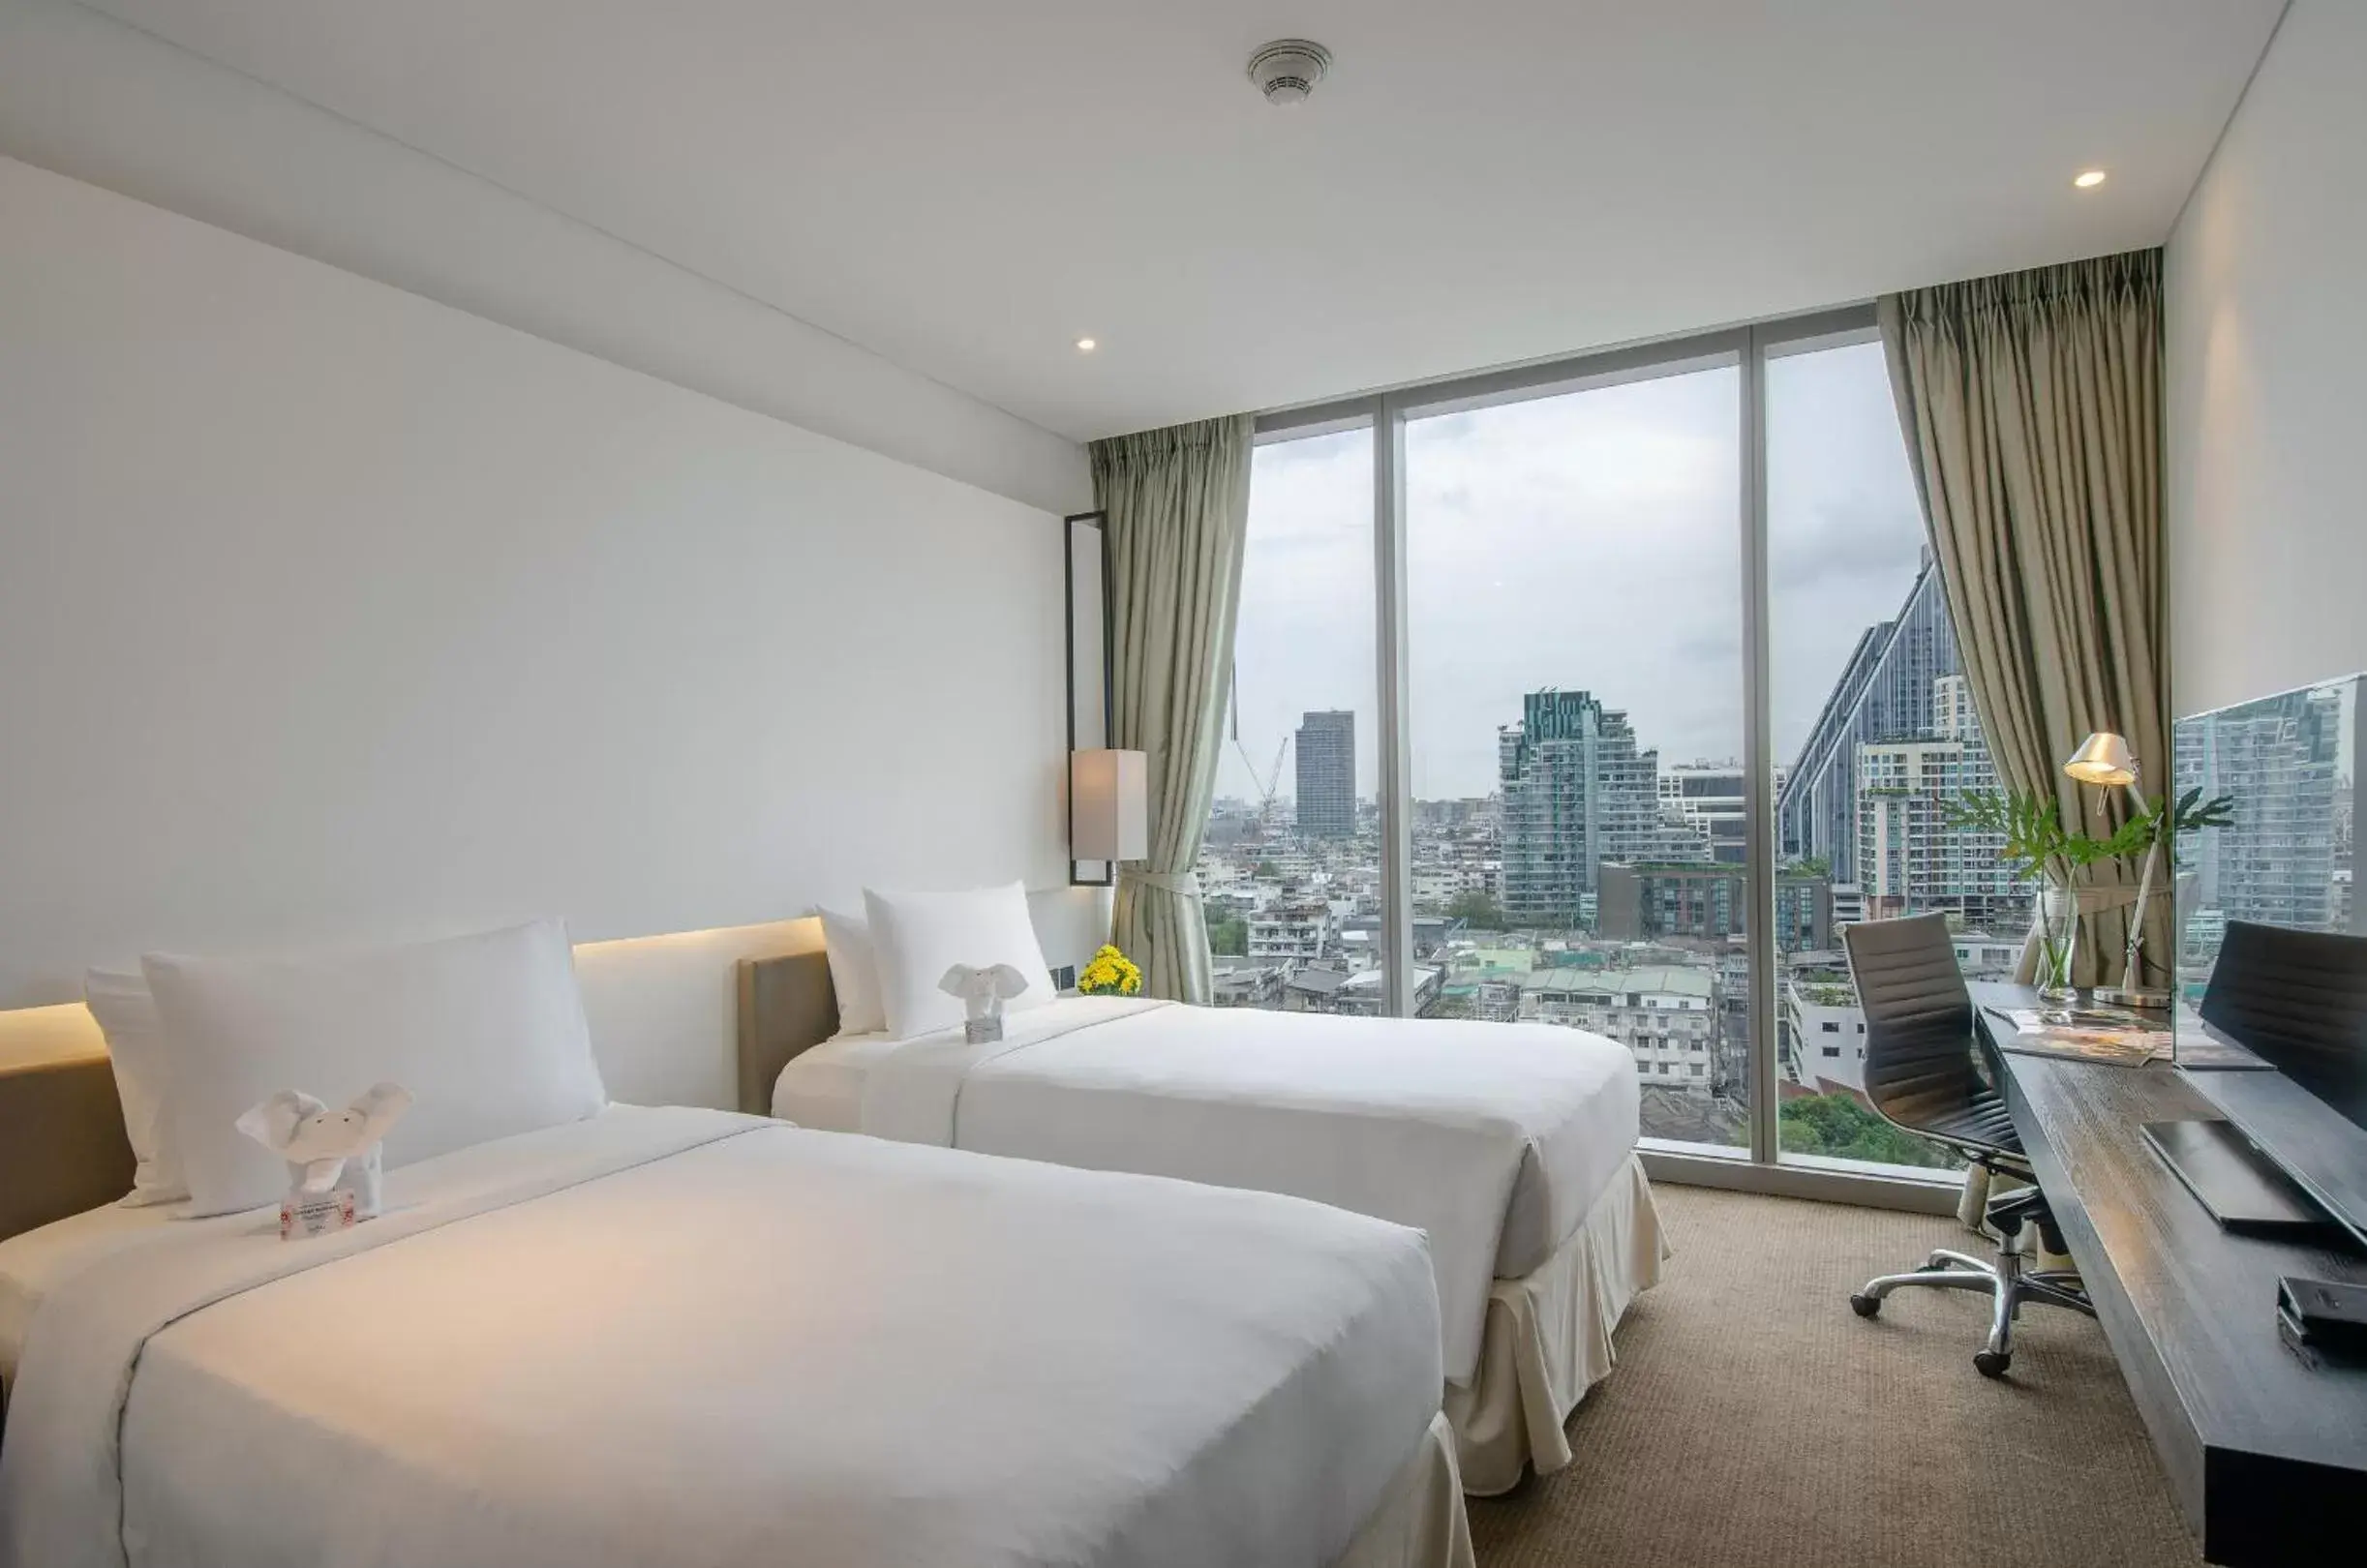 Bedroom in Amara Bangkok Hotel